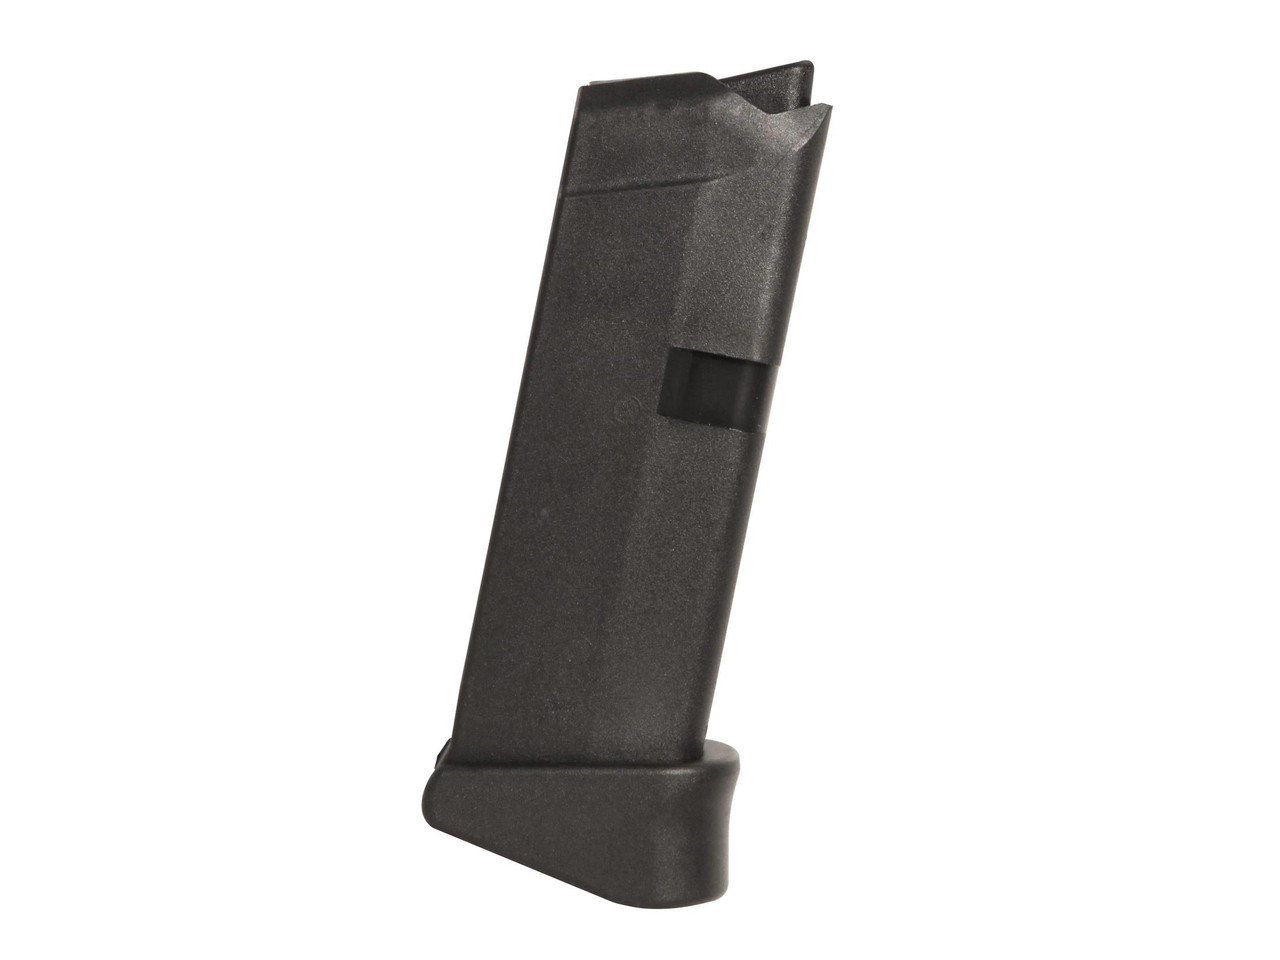 Glock Factory Magazine Glock 42 with Extension 380 ACP 6-Round Polymer Black #MF08833